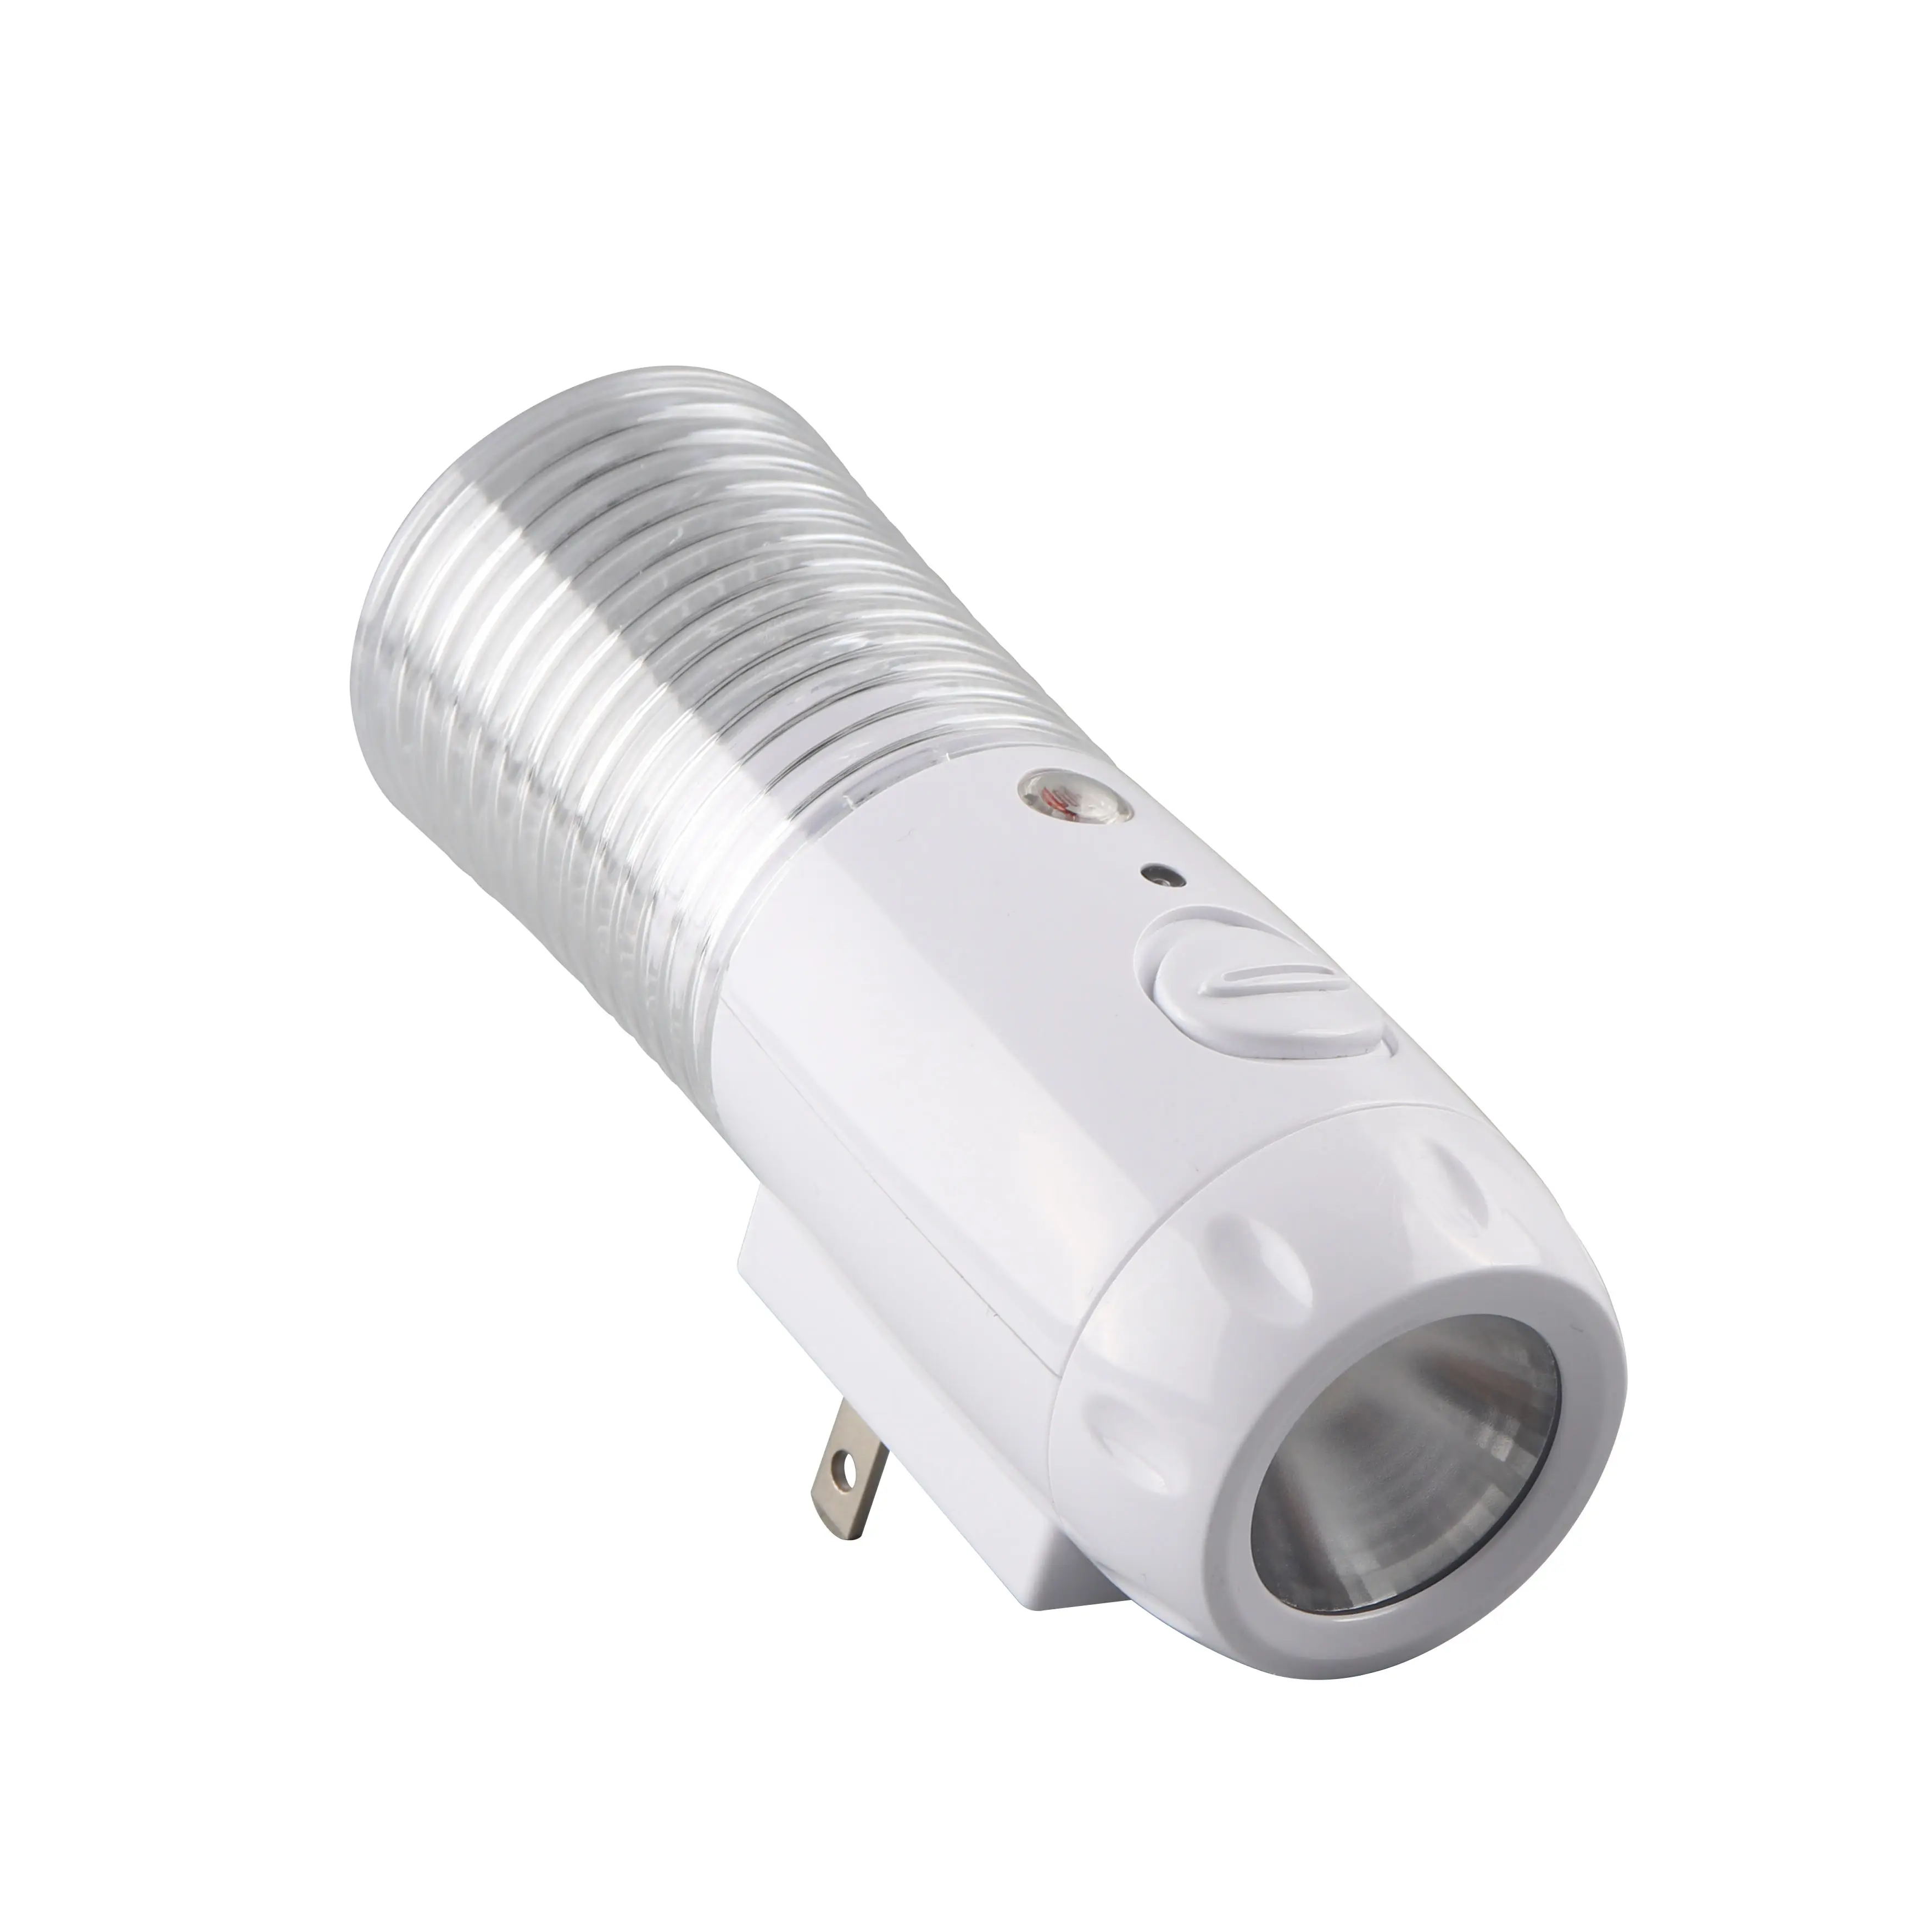 Led Light Lamp Multi-function Smart Home Lights LED Handheld Plug Night Light Rechargeable Flashlight